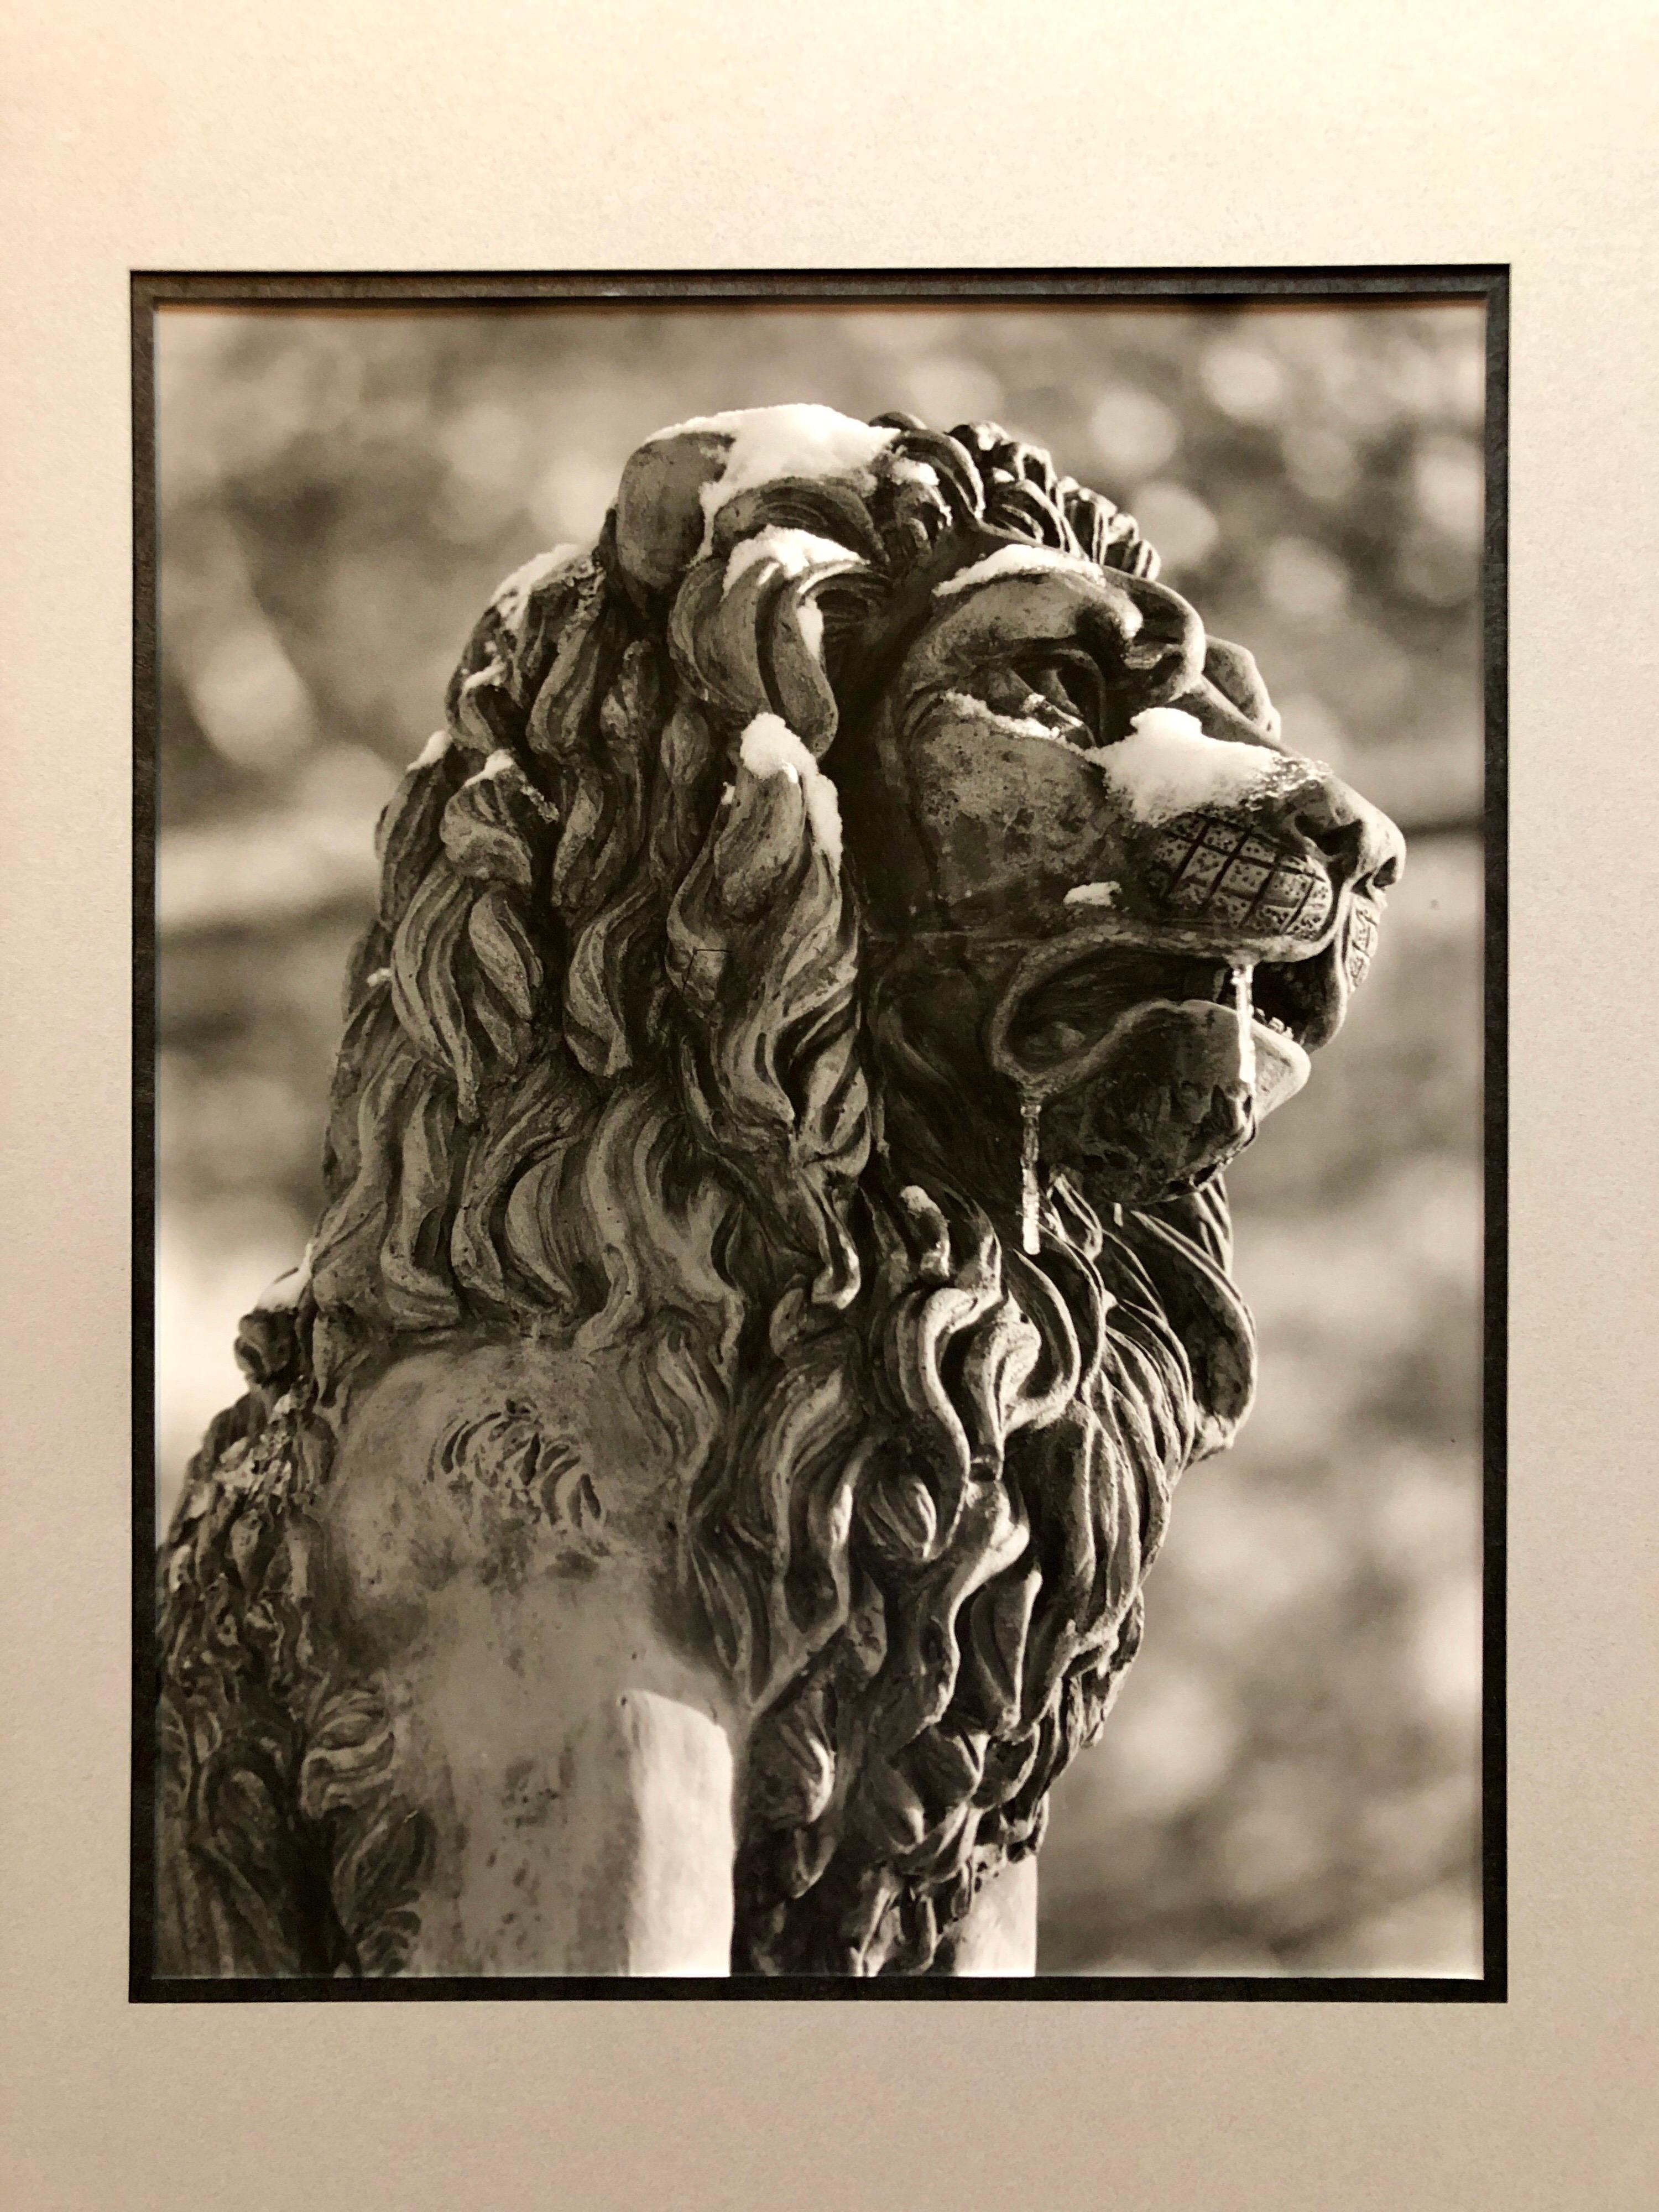 Theodore Cohen  Figurative Photograph - Stone Lion Sculpture Photograph, Jerusalem Vintage Silver Gelatin Photo Print